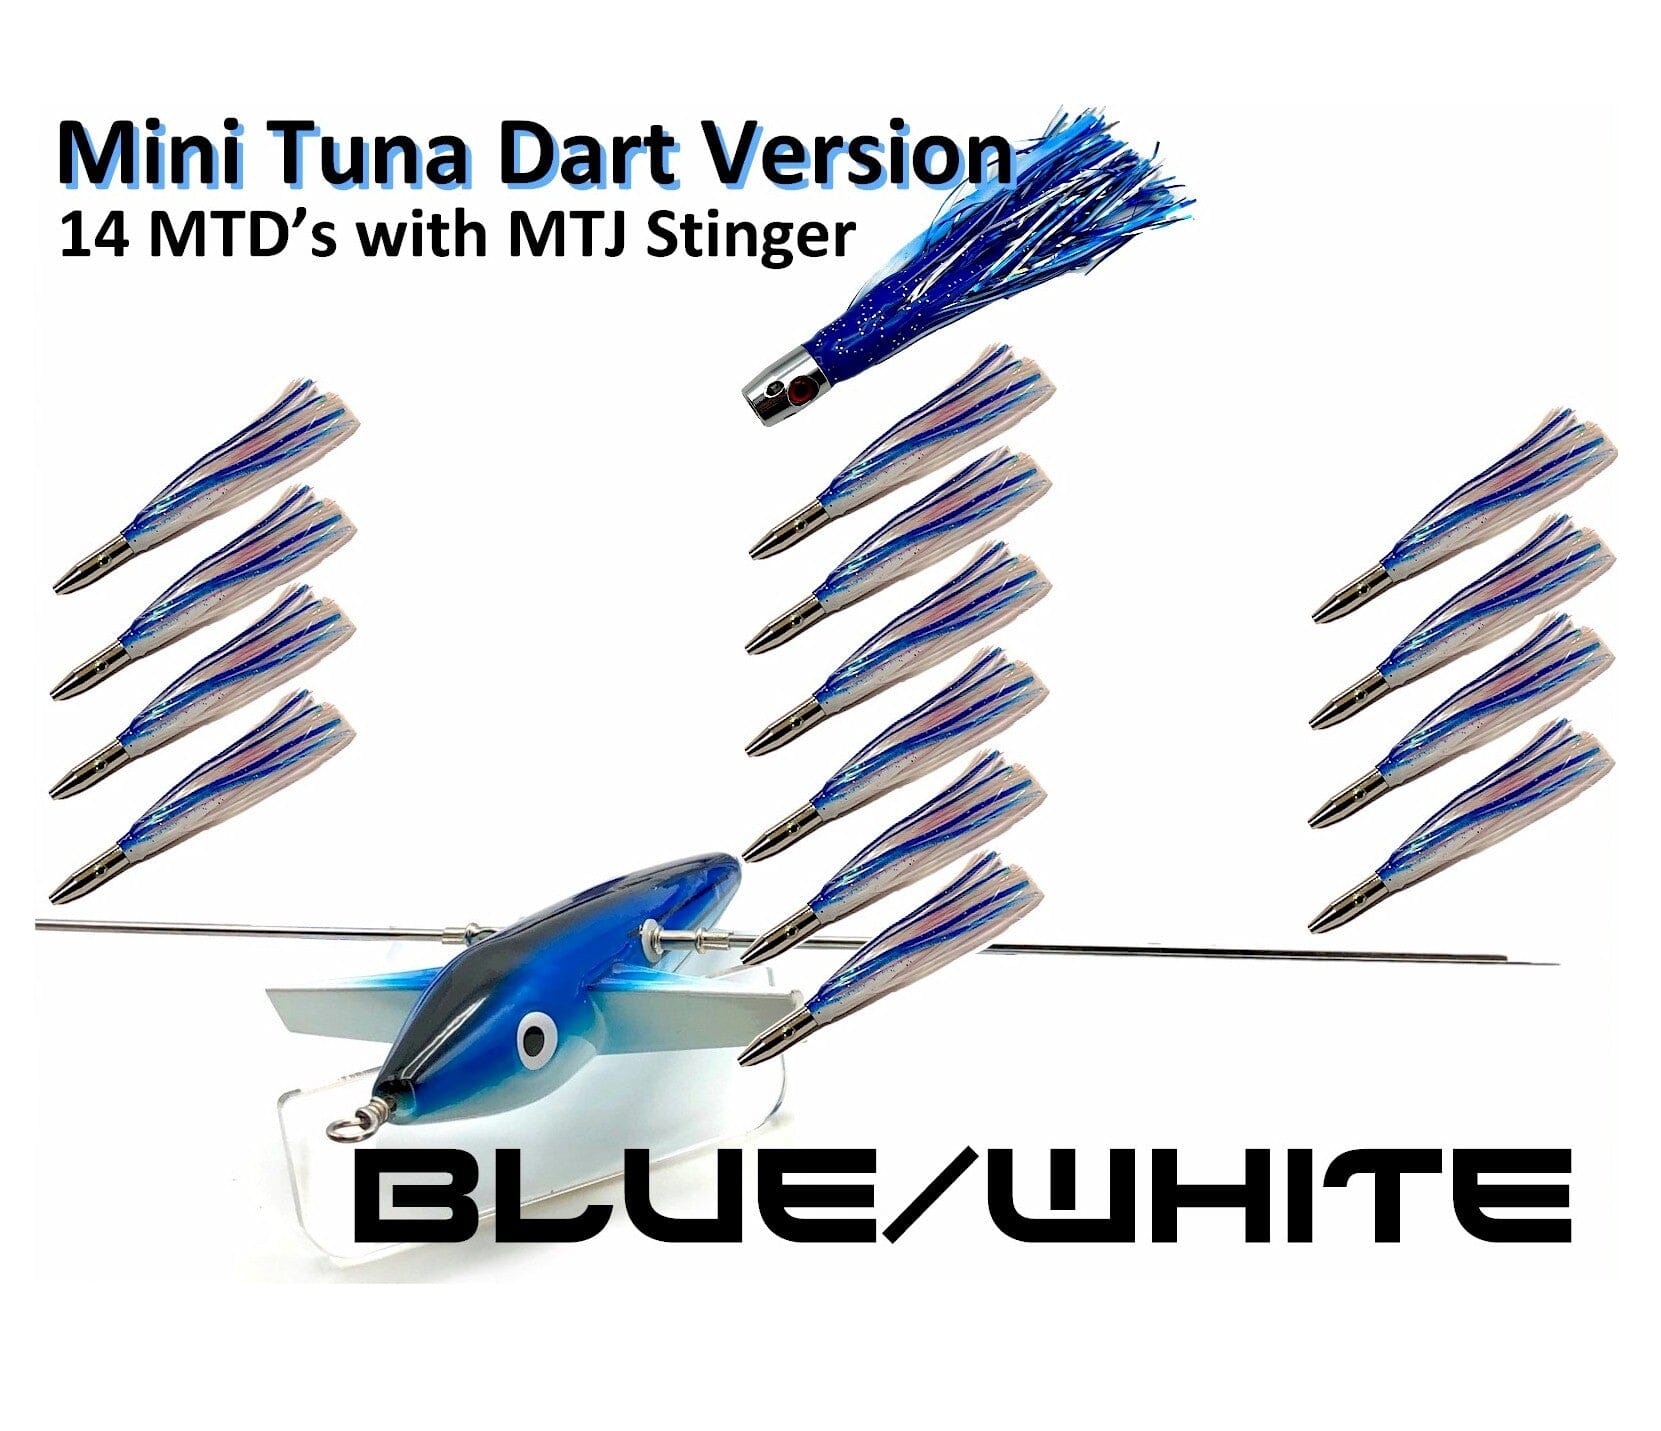 19" Sidewinder Directional Bars-Mini Tuna Dart Version Daisy Chains & Multi Bait Rigs Tormenter Ocean Blue/White Port 